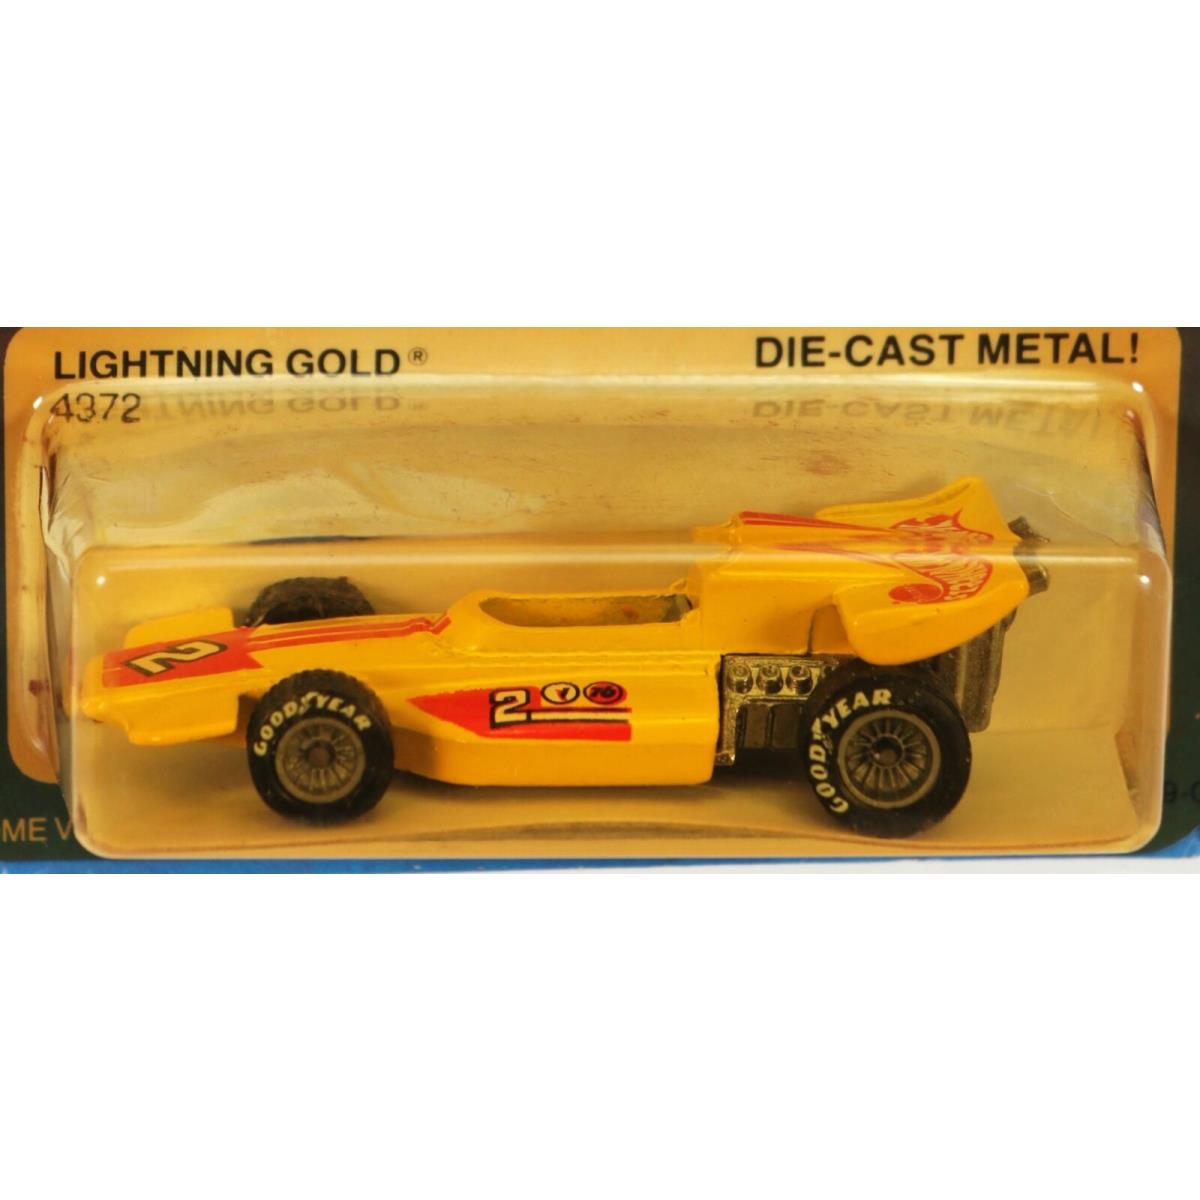 Hot Wheels Lightning Gold Real Riders Series 4372 Nrfp 1982 Yellow GH 1:64